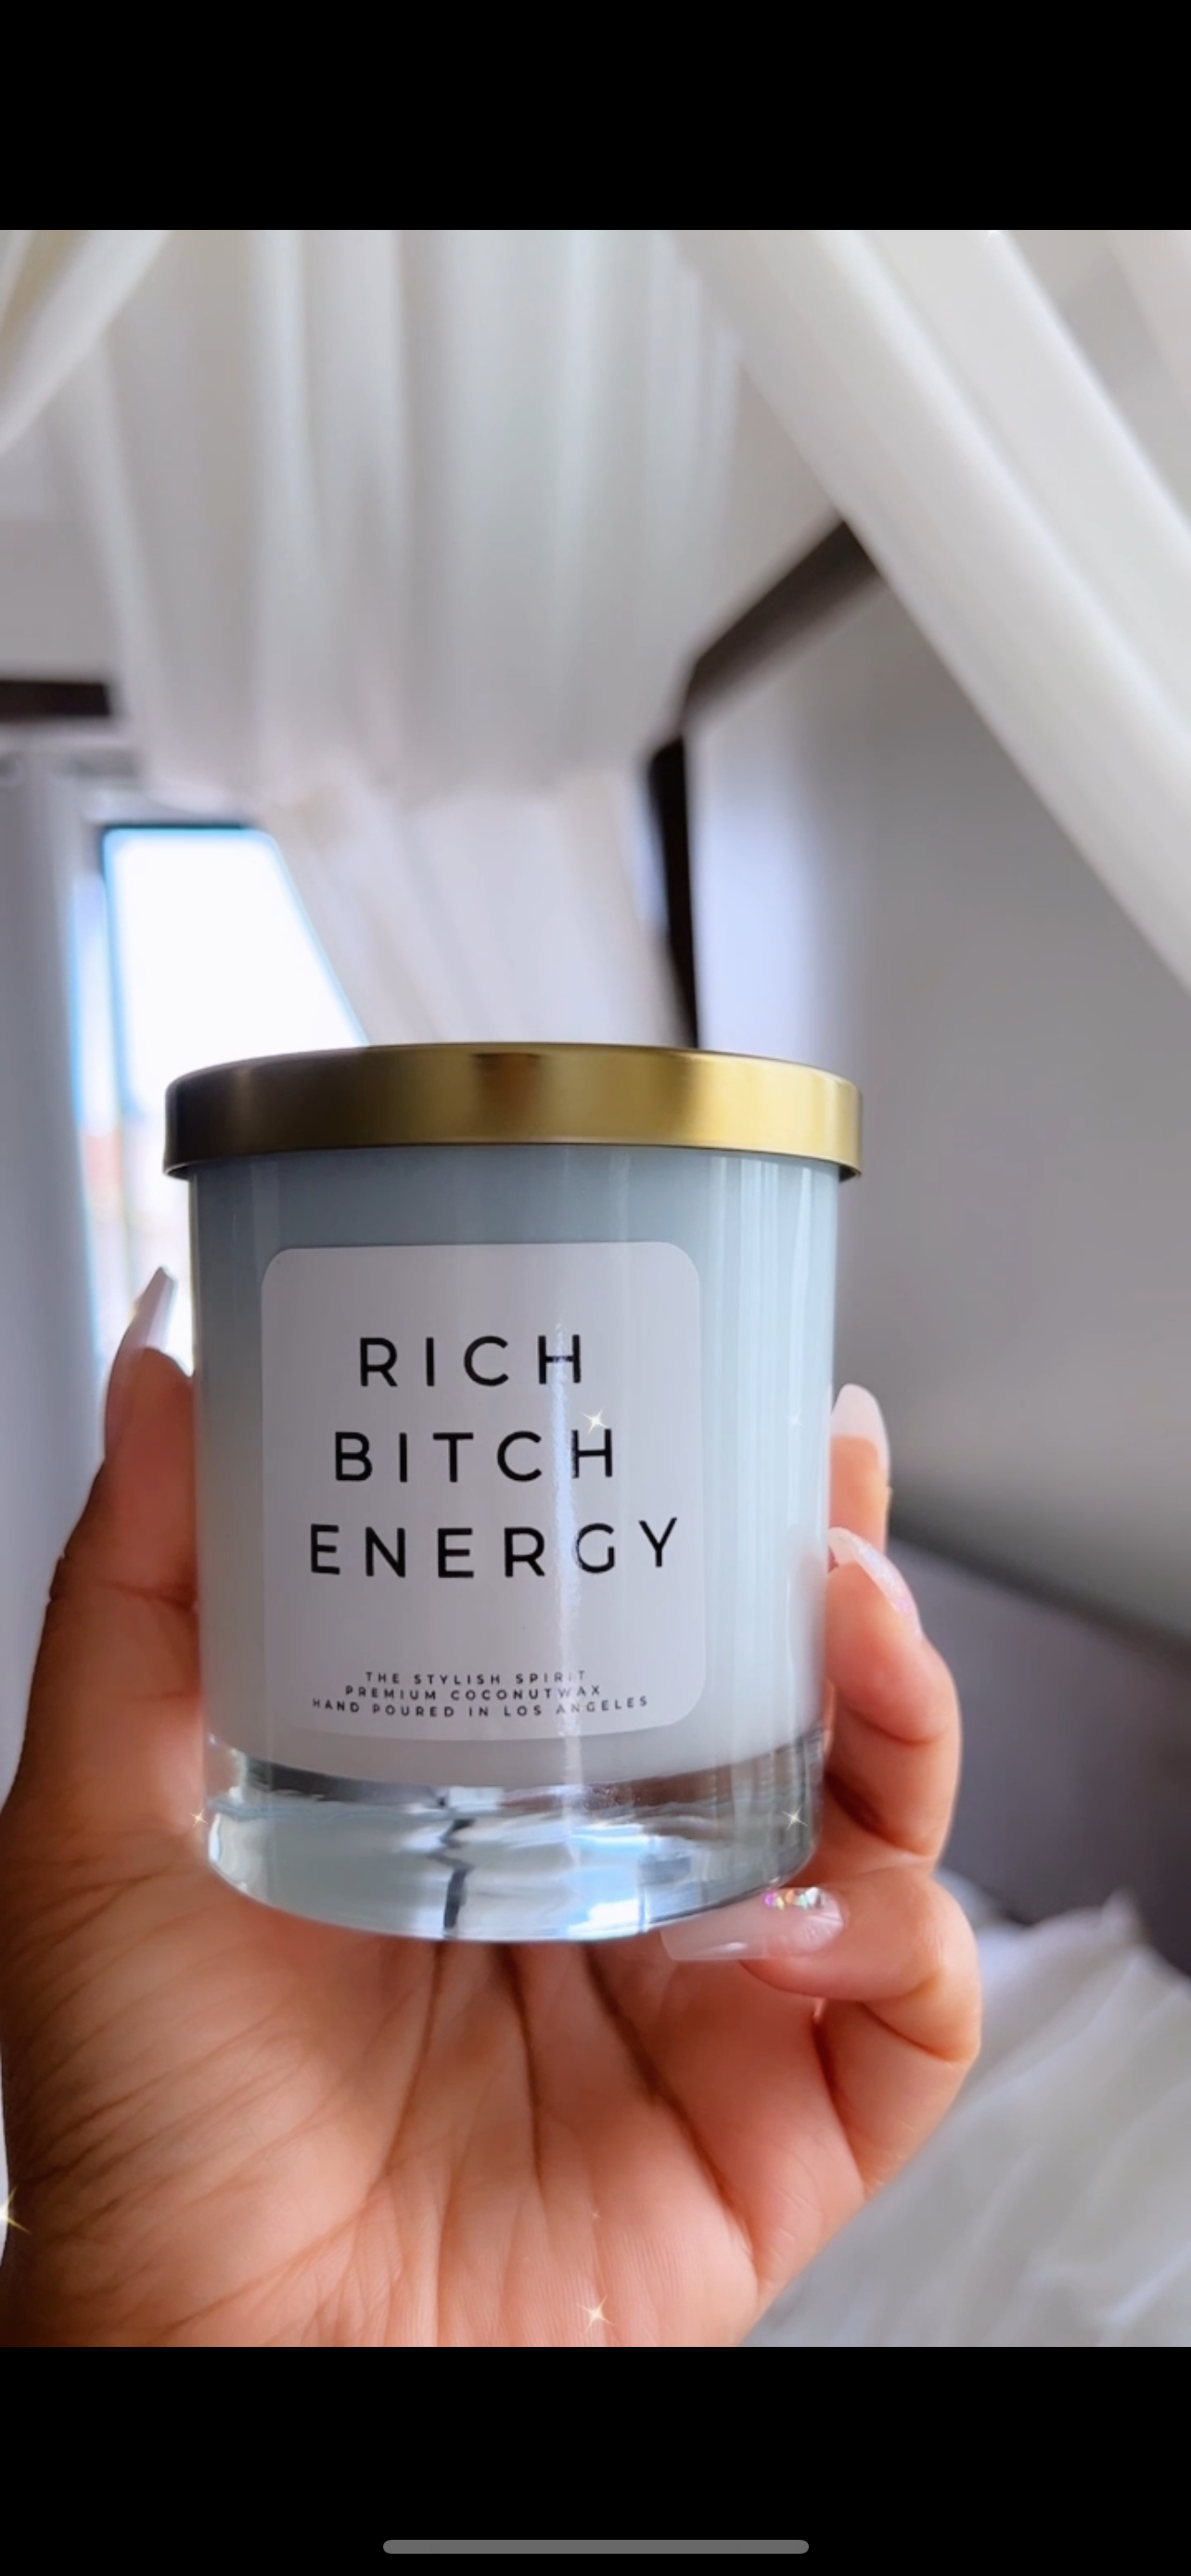 Rich B!tch Energy Candle